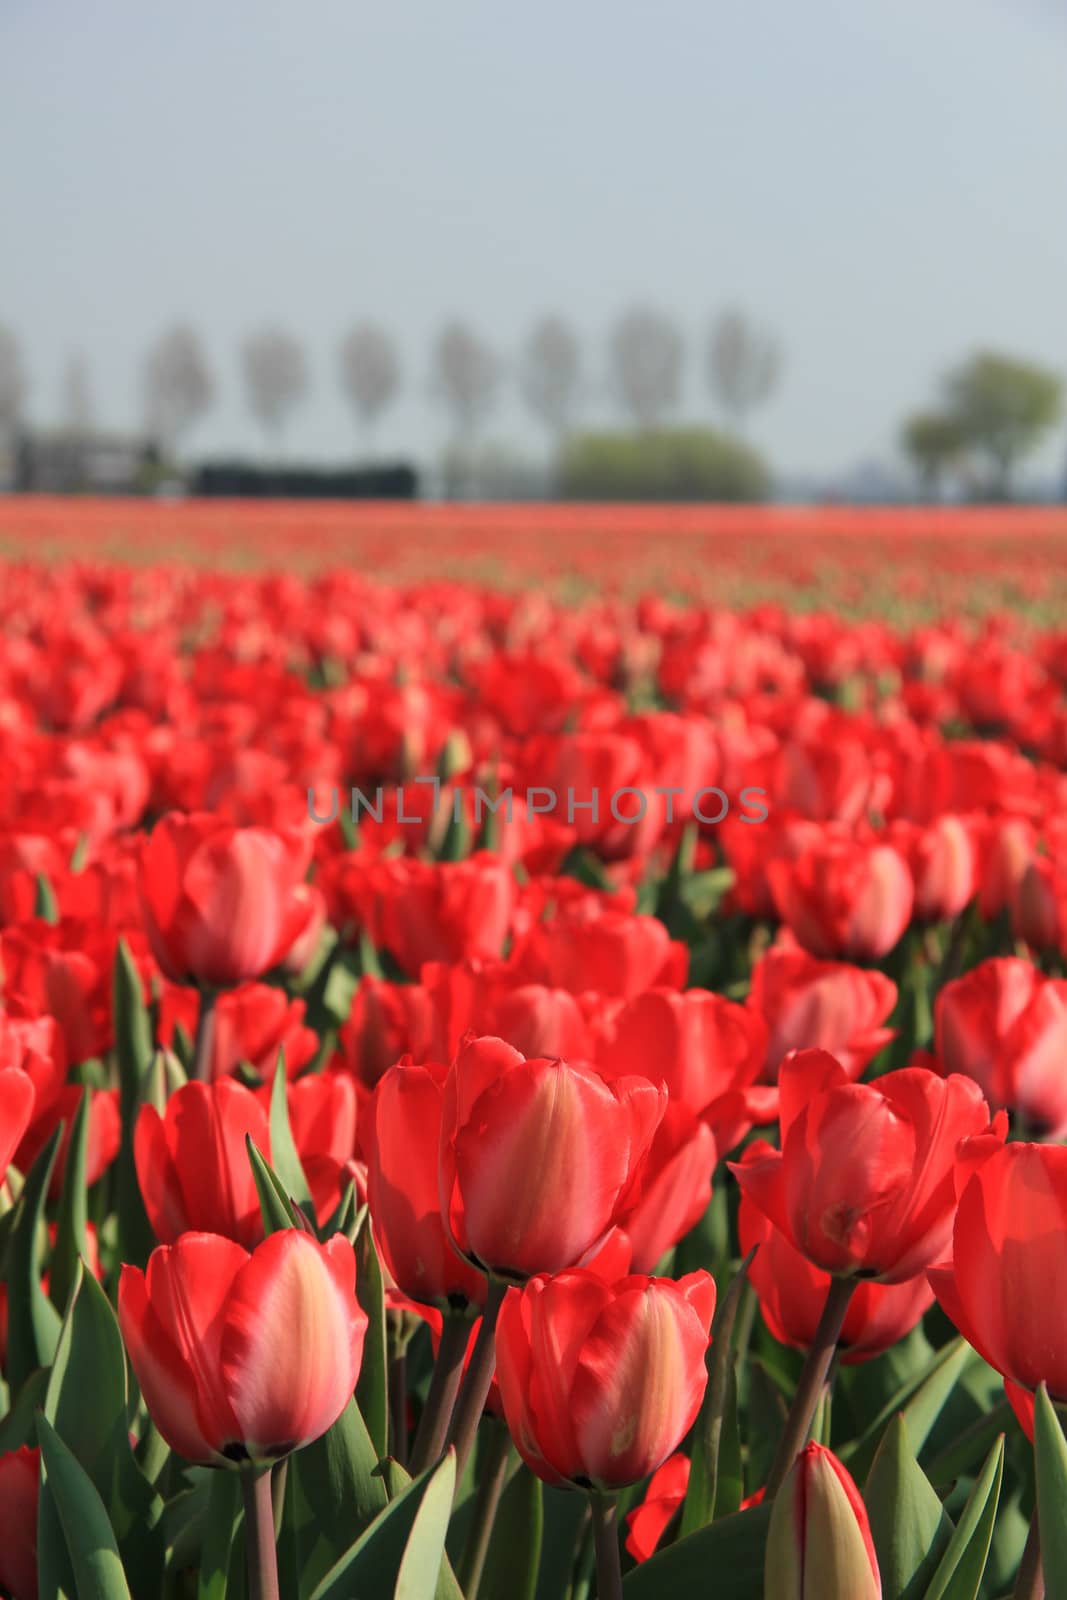 Red tulips in a field by studioportosabbia